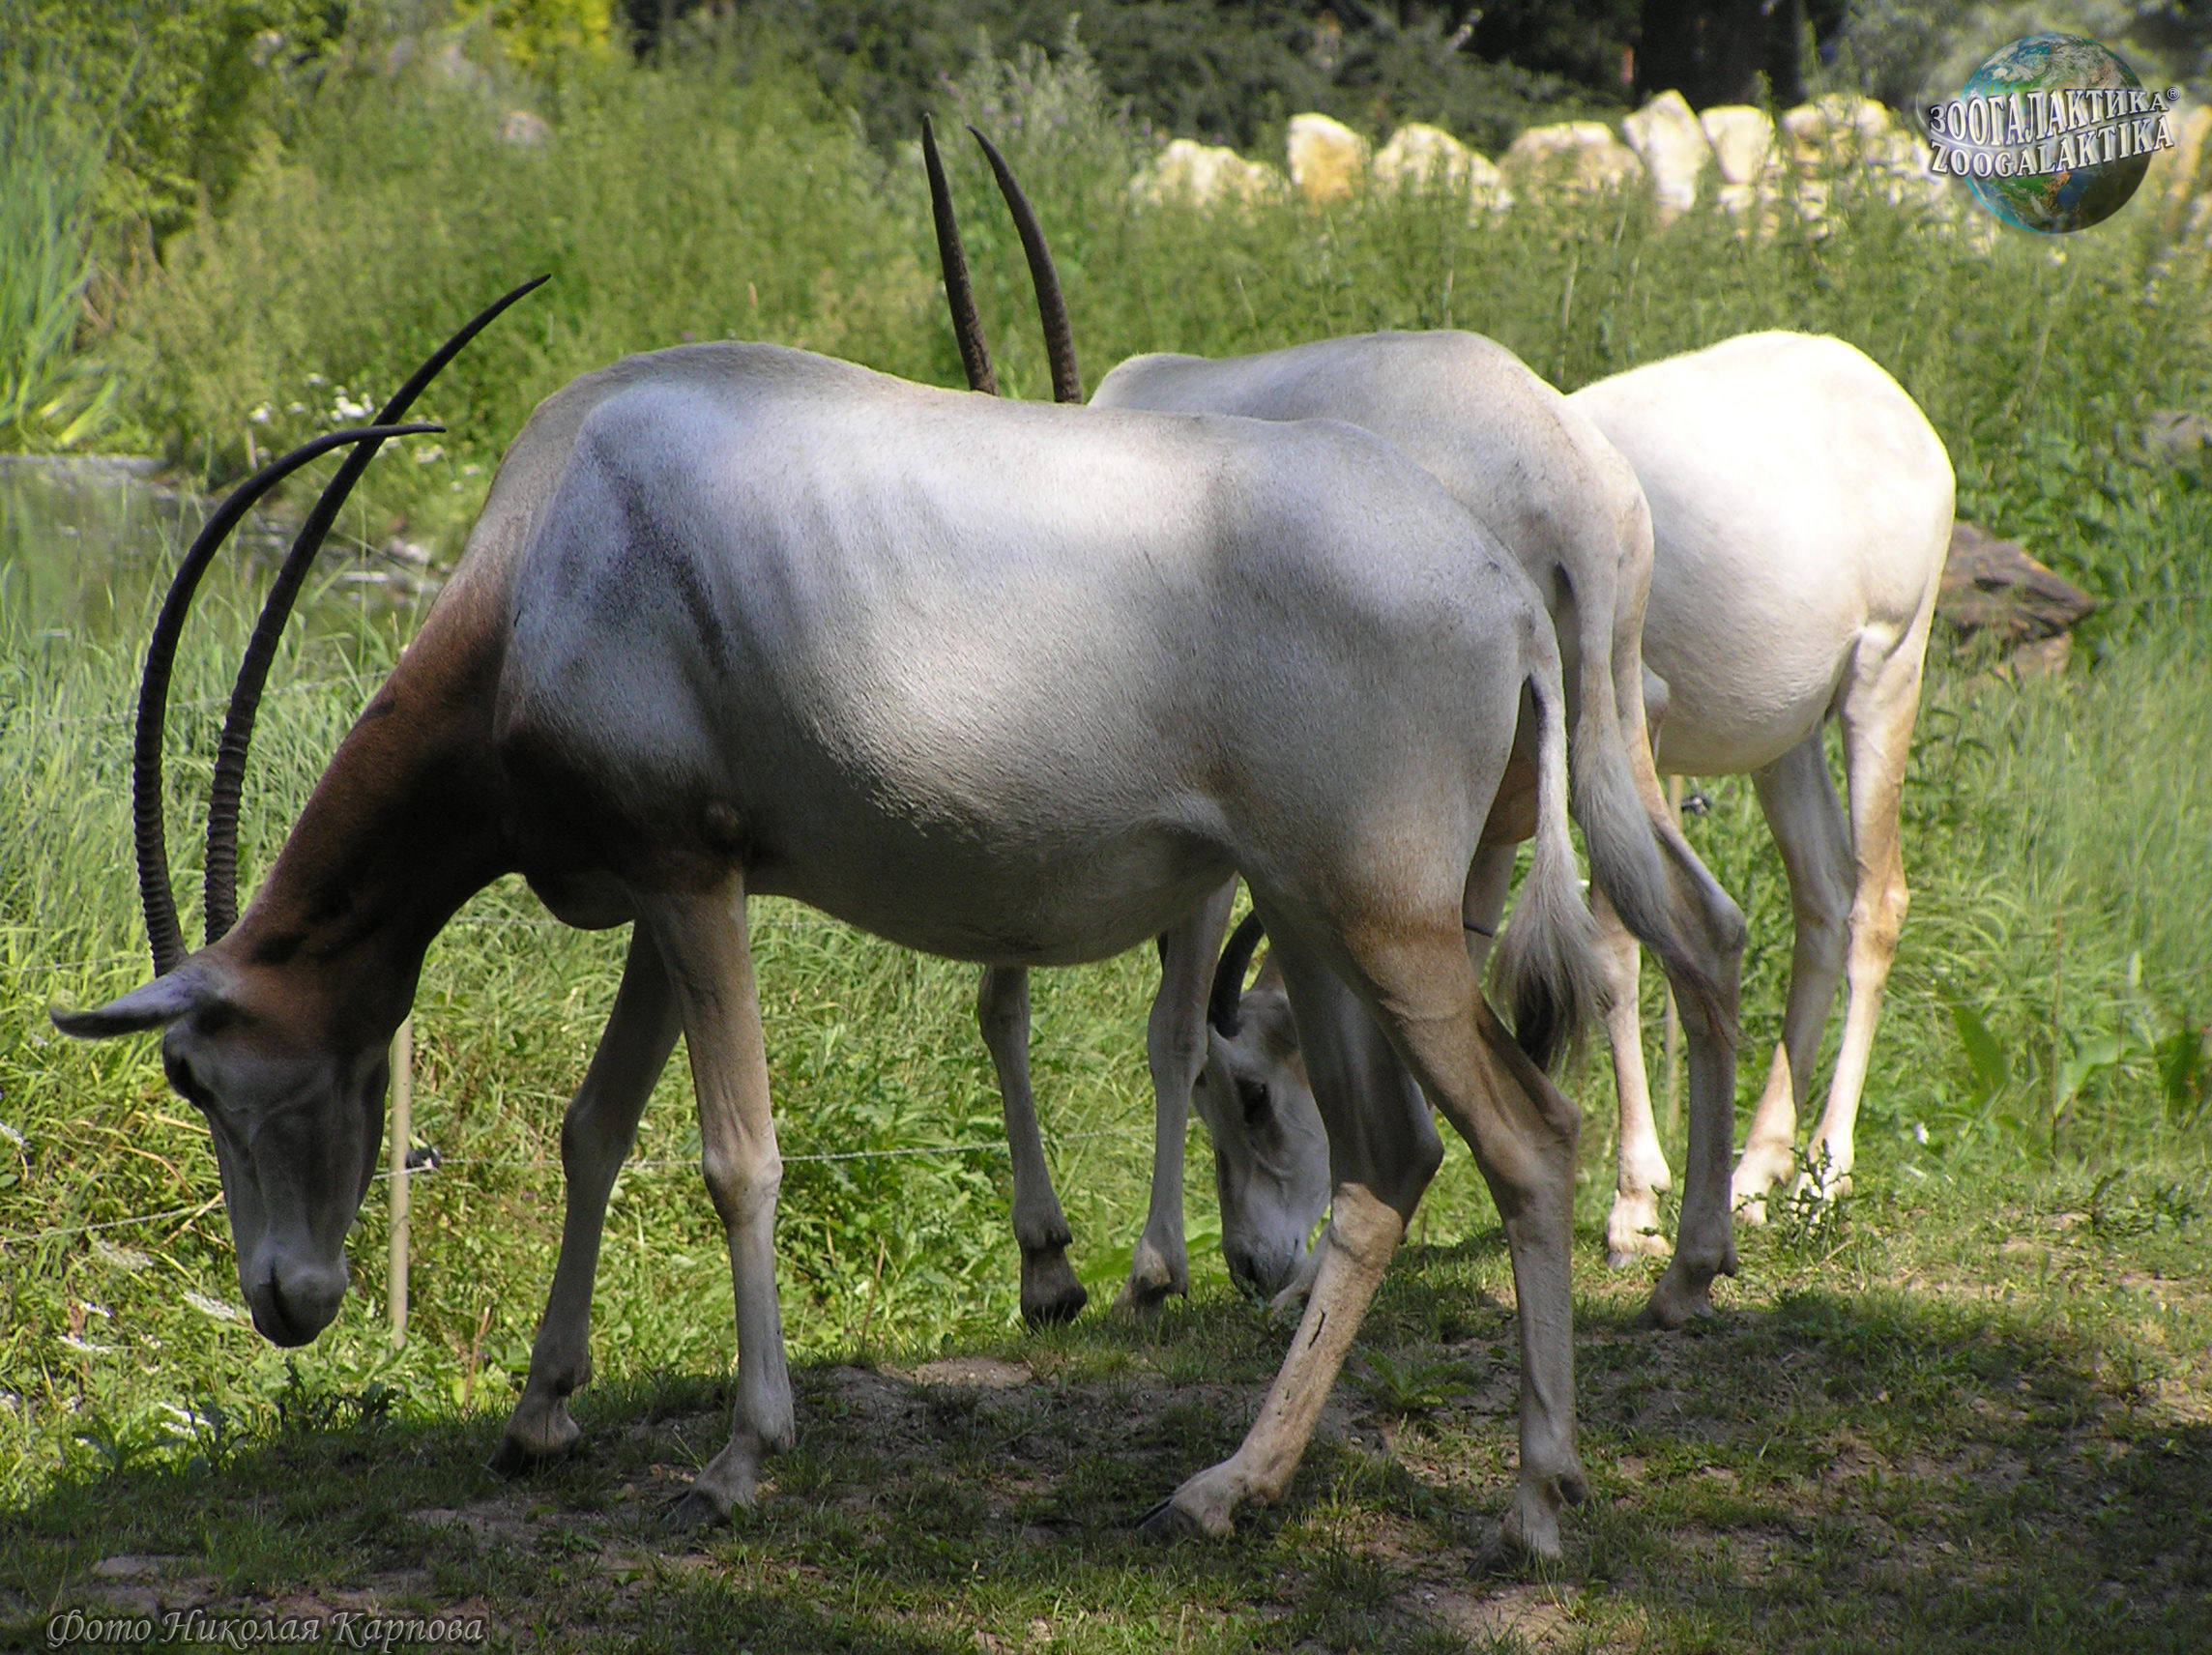 Саблерогая антилопа из африки 5 букв. Саблерогая антилопа. Антилопа нильгау. Scimitar-Horned Oryx. Антилопа Орикс.